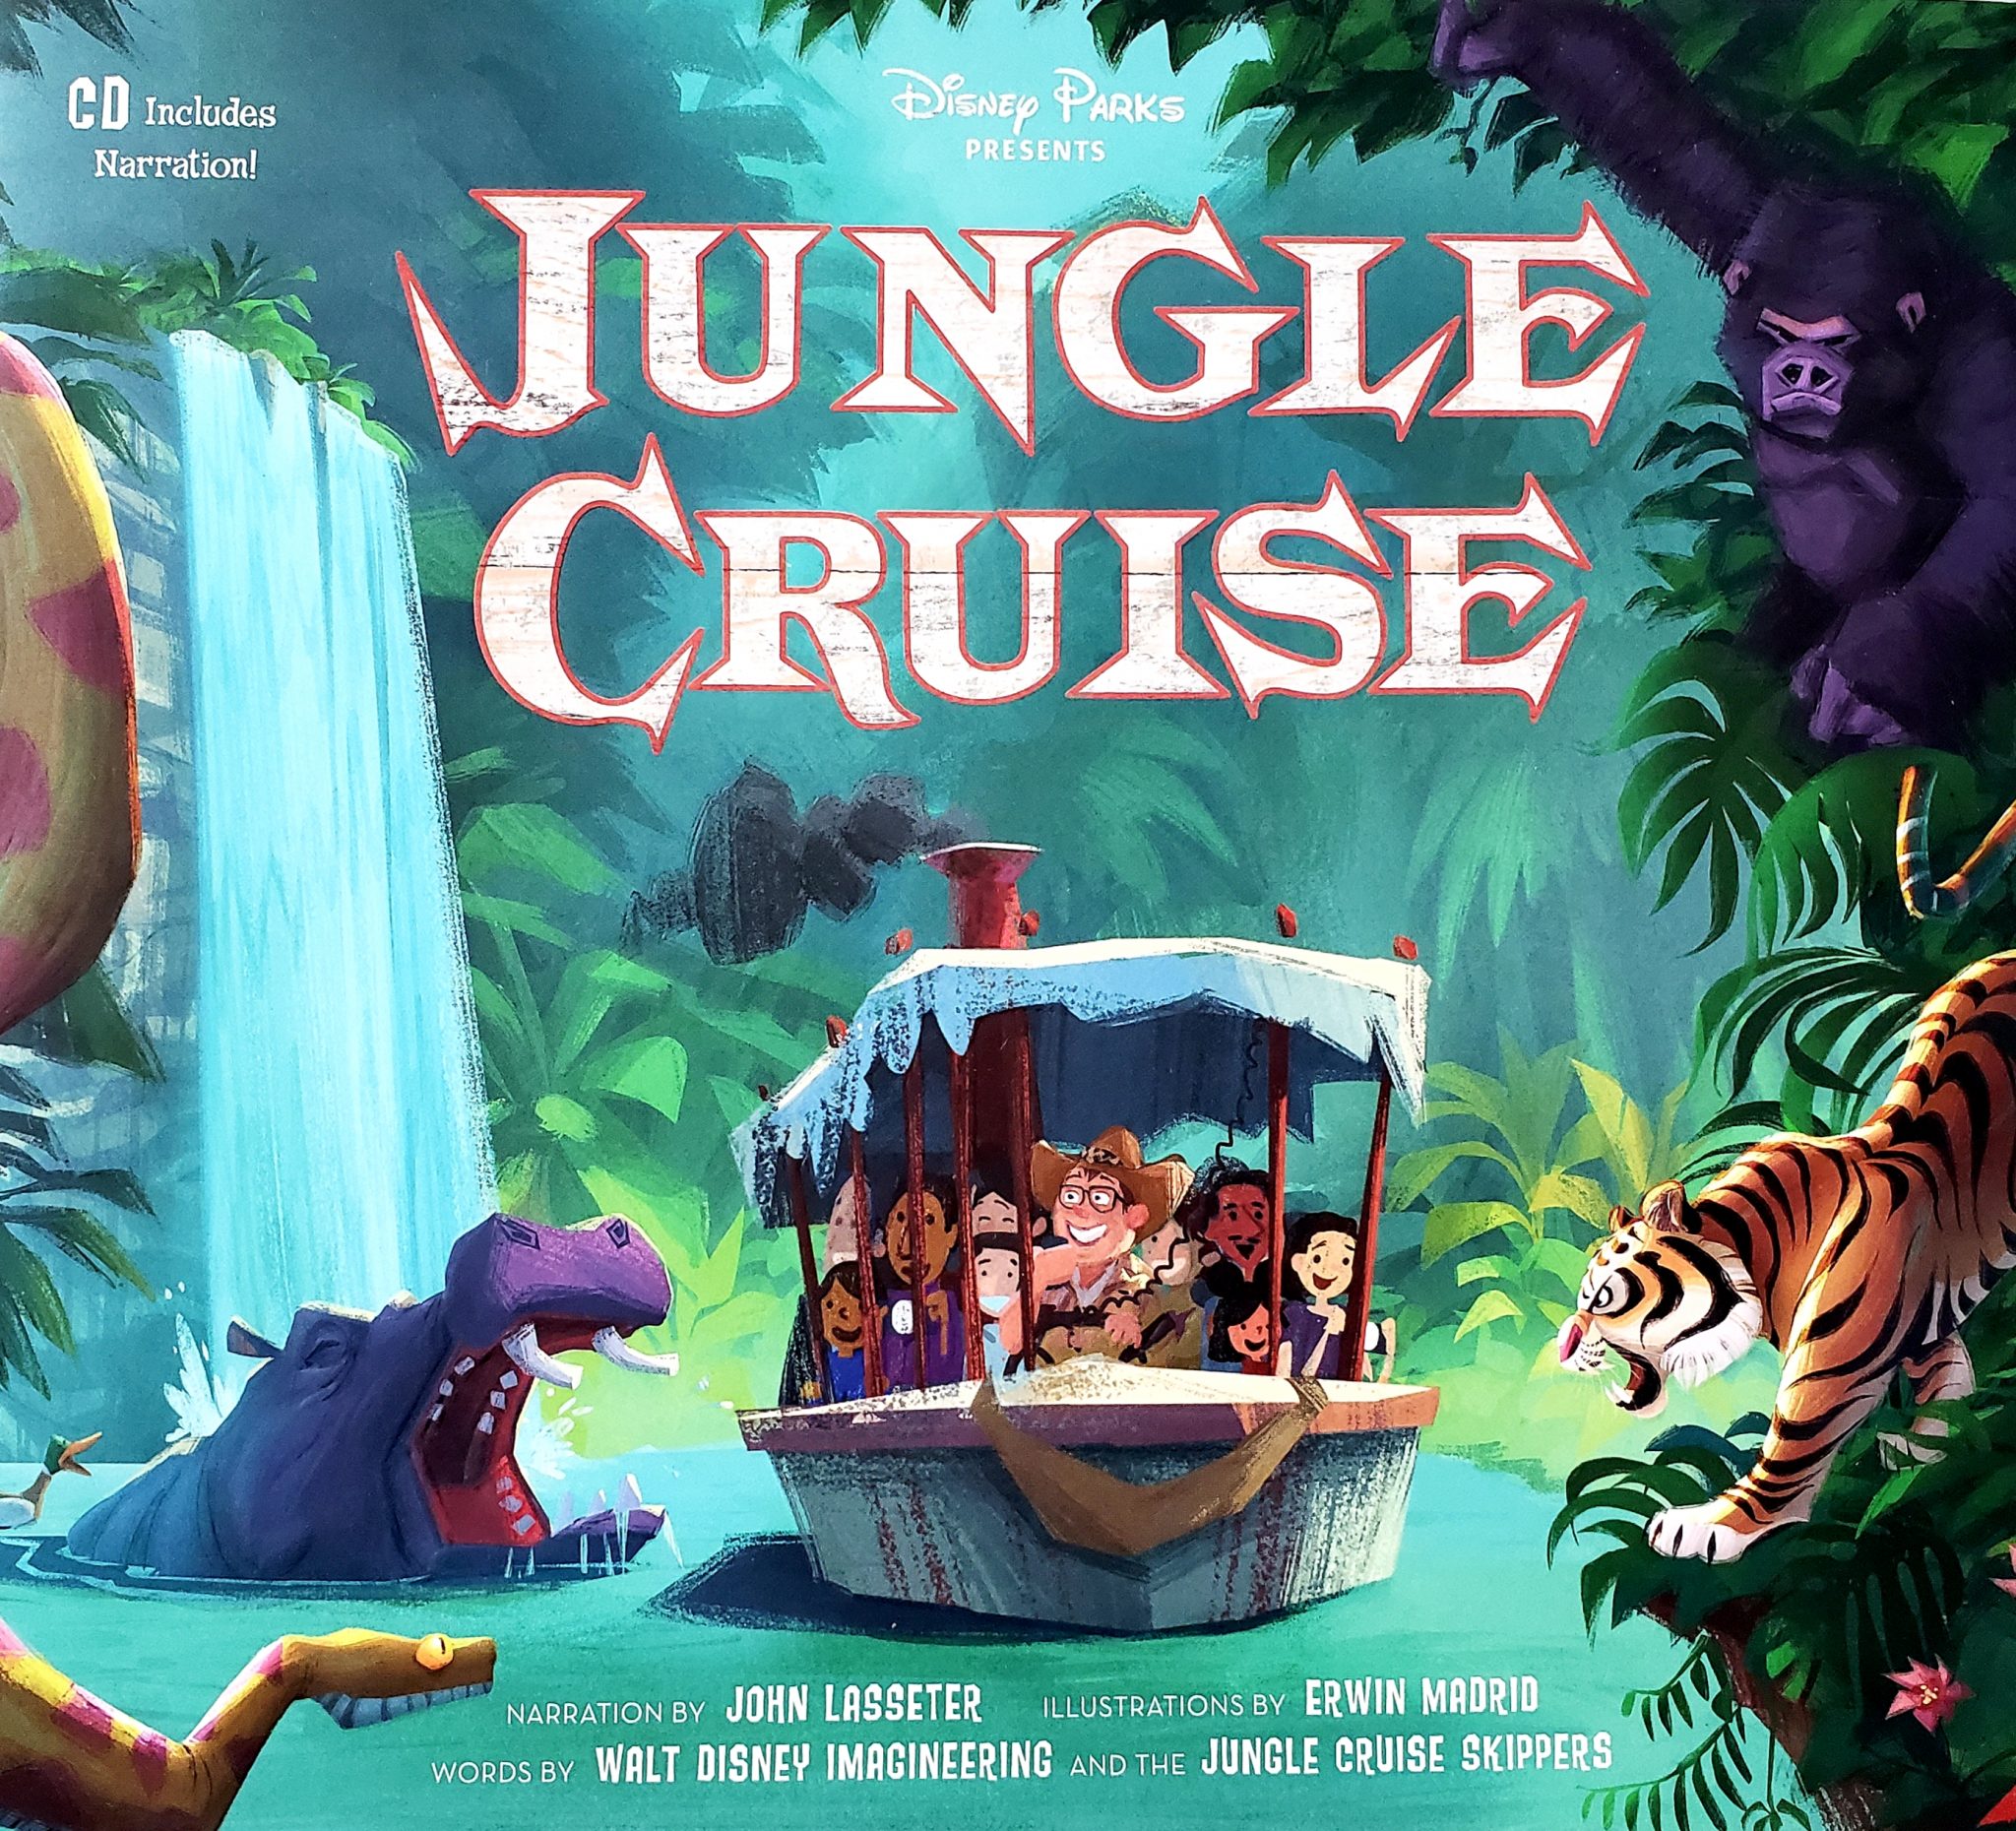 Disney Parks Presents: Jungle Cruise